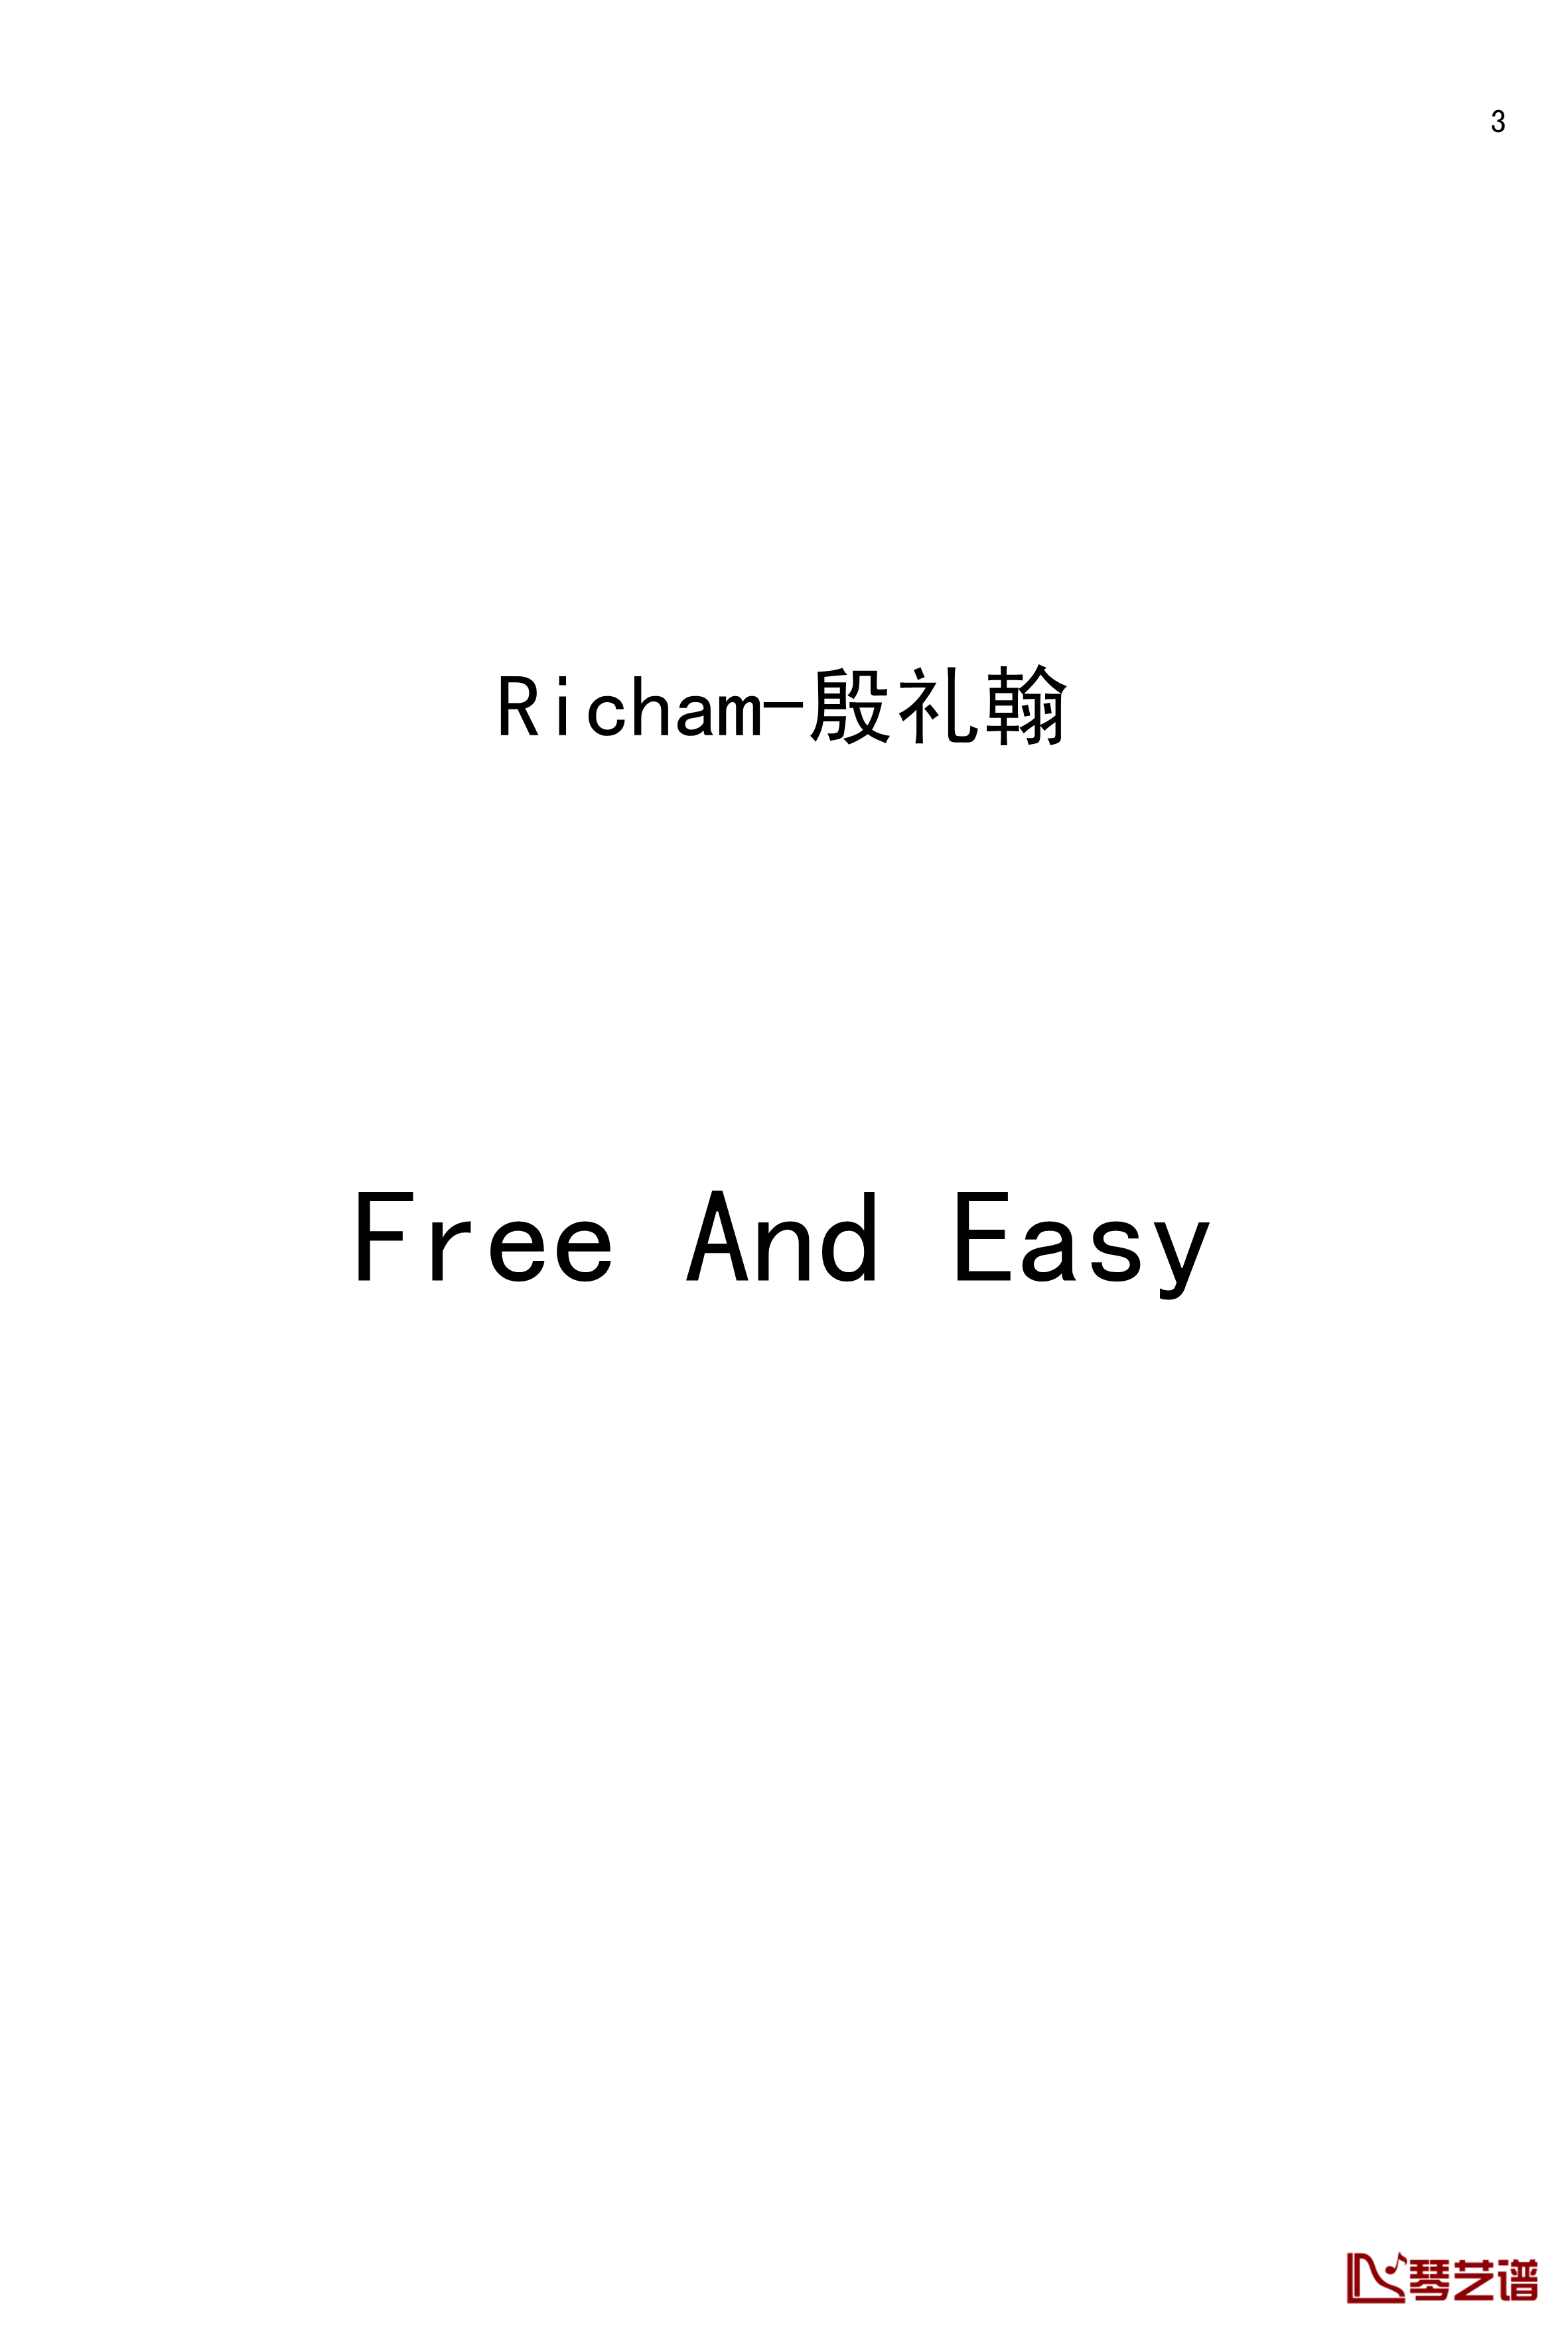 Free And Easy钢琴谱-Richam3